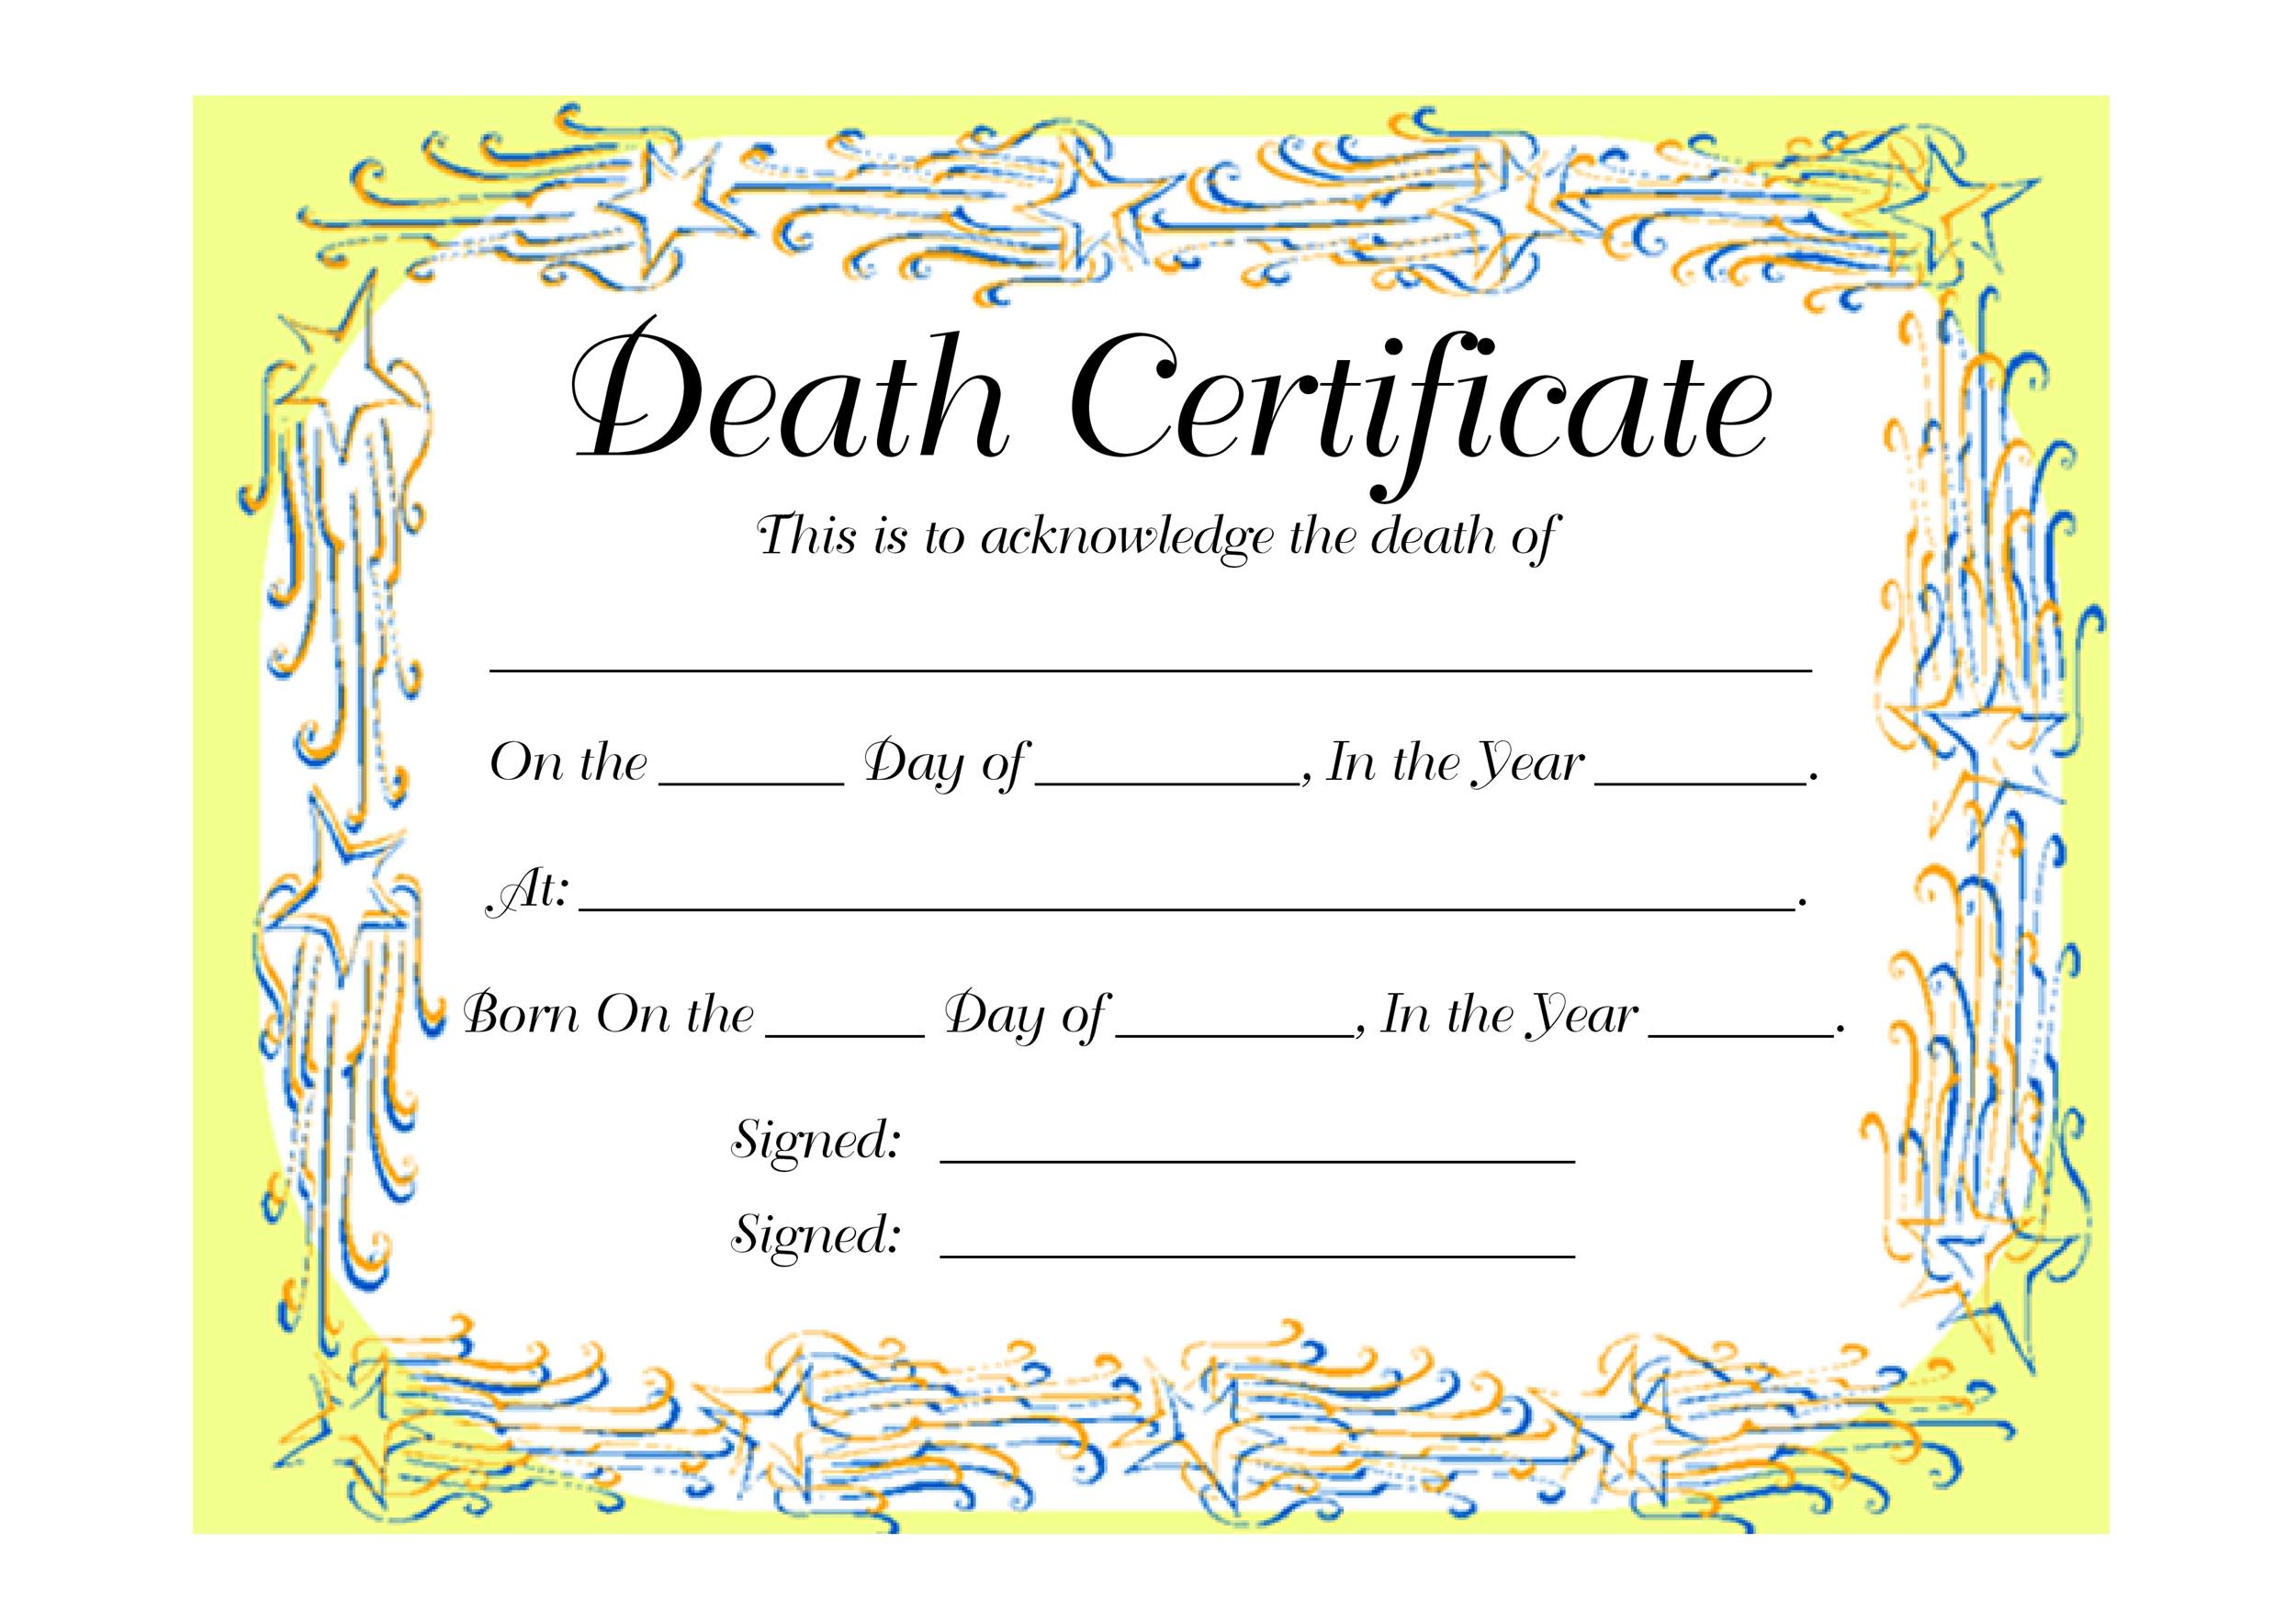 37 Blank Death Certificate Templates [100 FREE] ᐅ TemplateLab